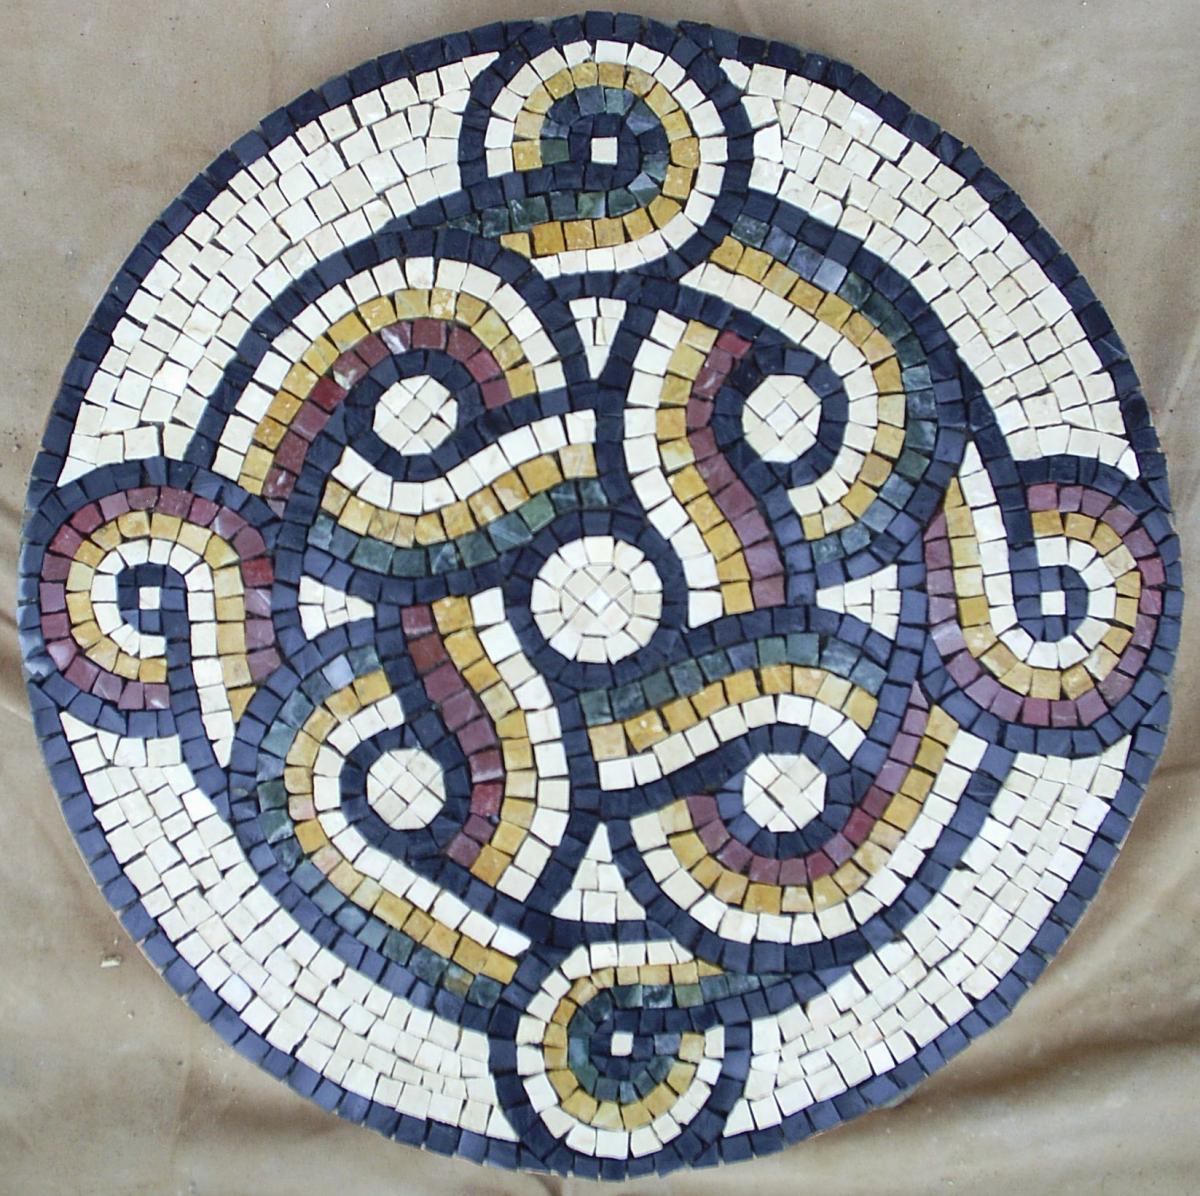 Copy of a Roman marble mosaic on a paving slab. 44cm diameter